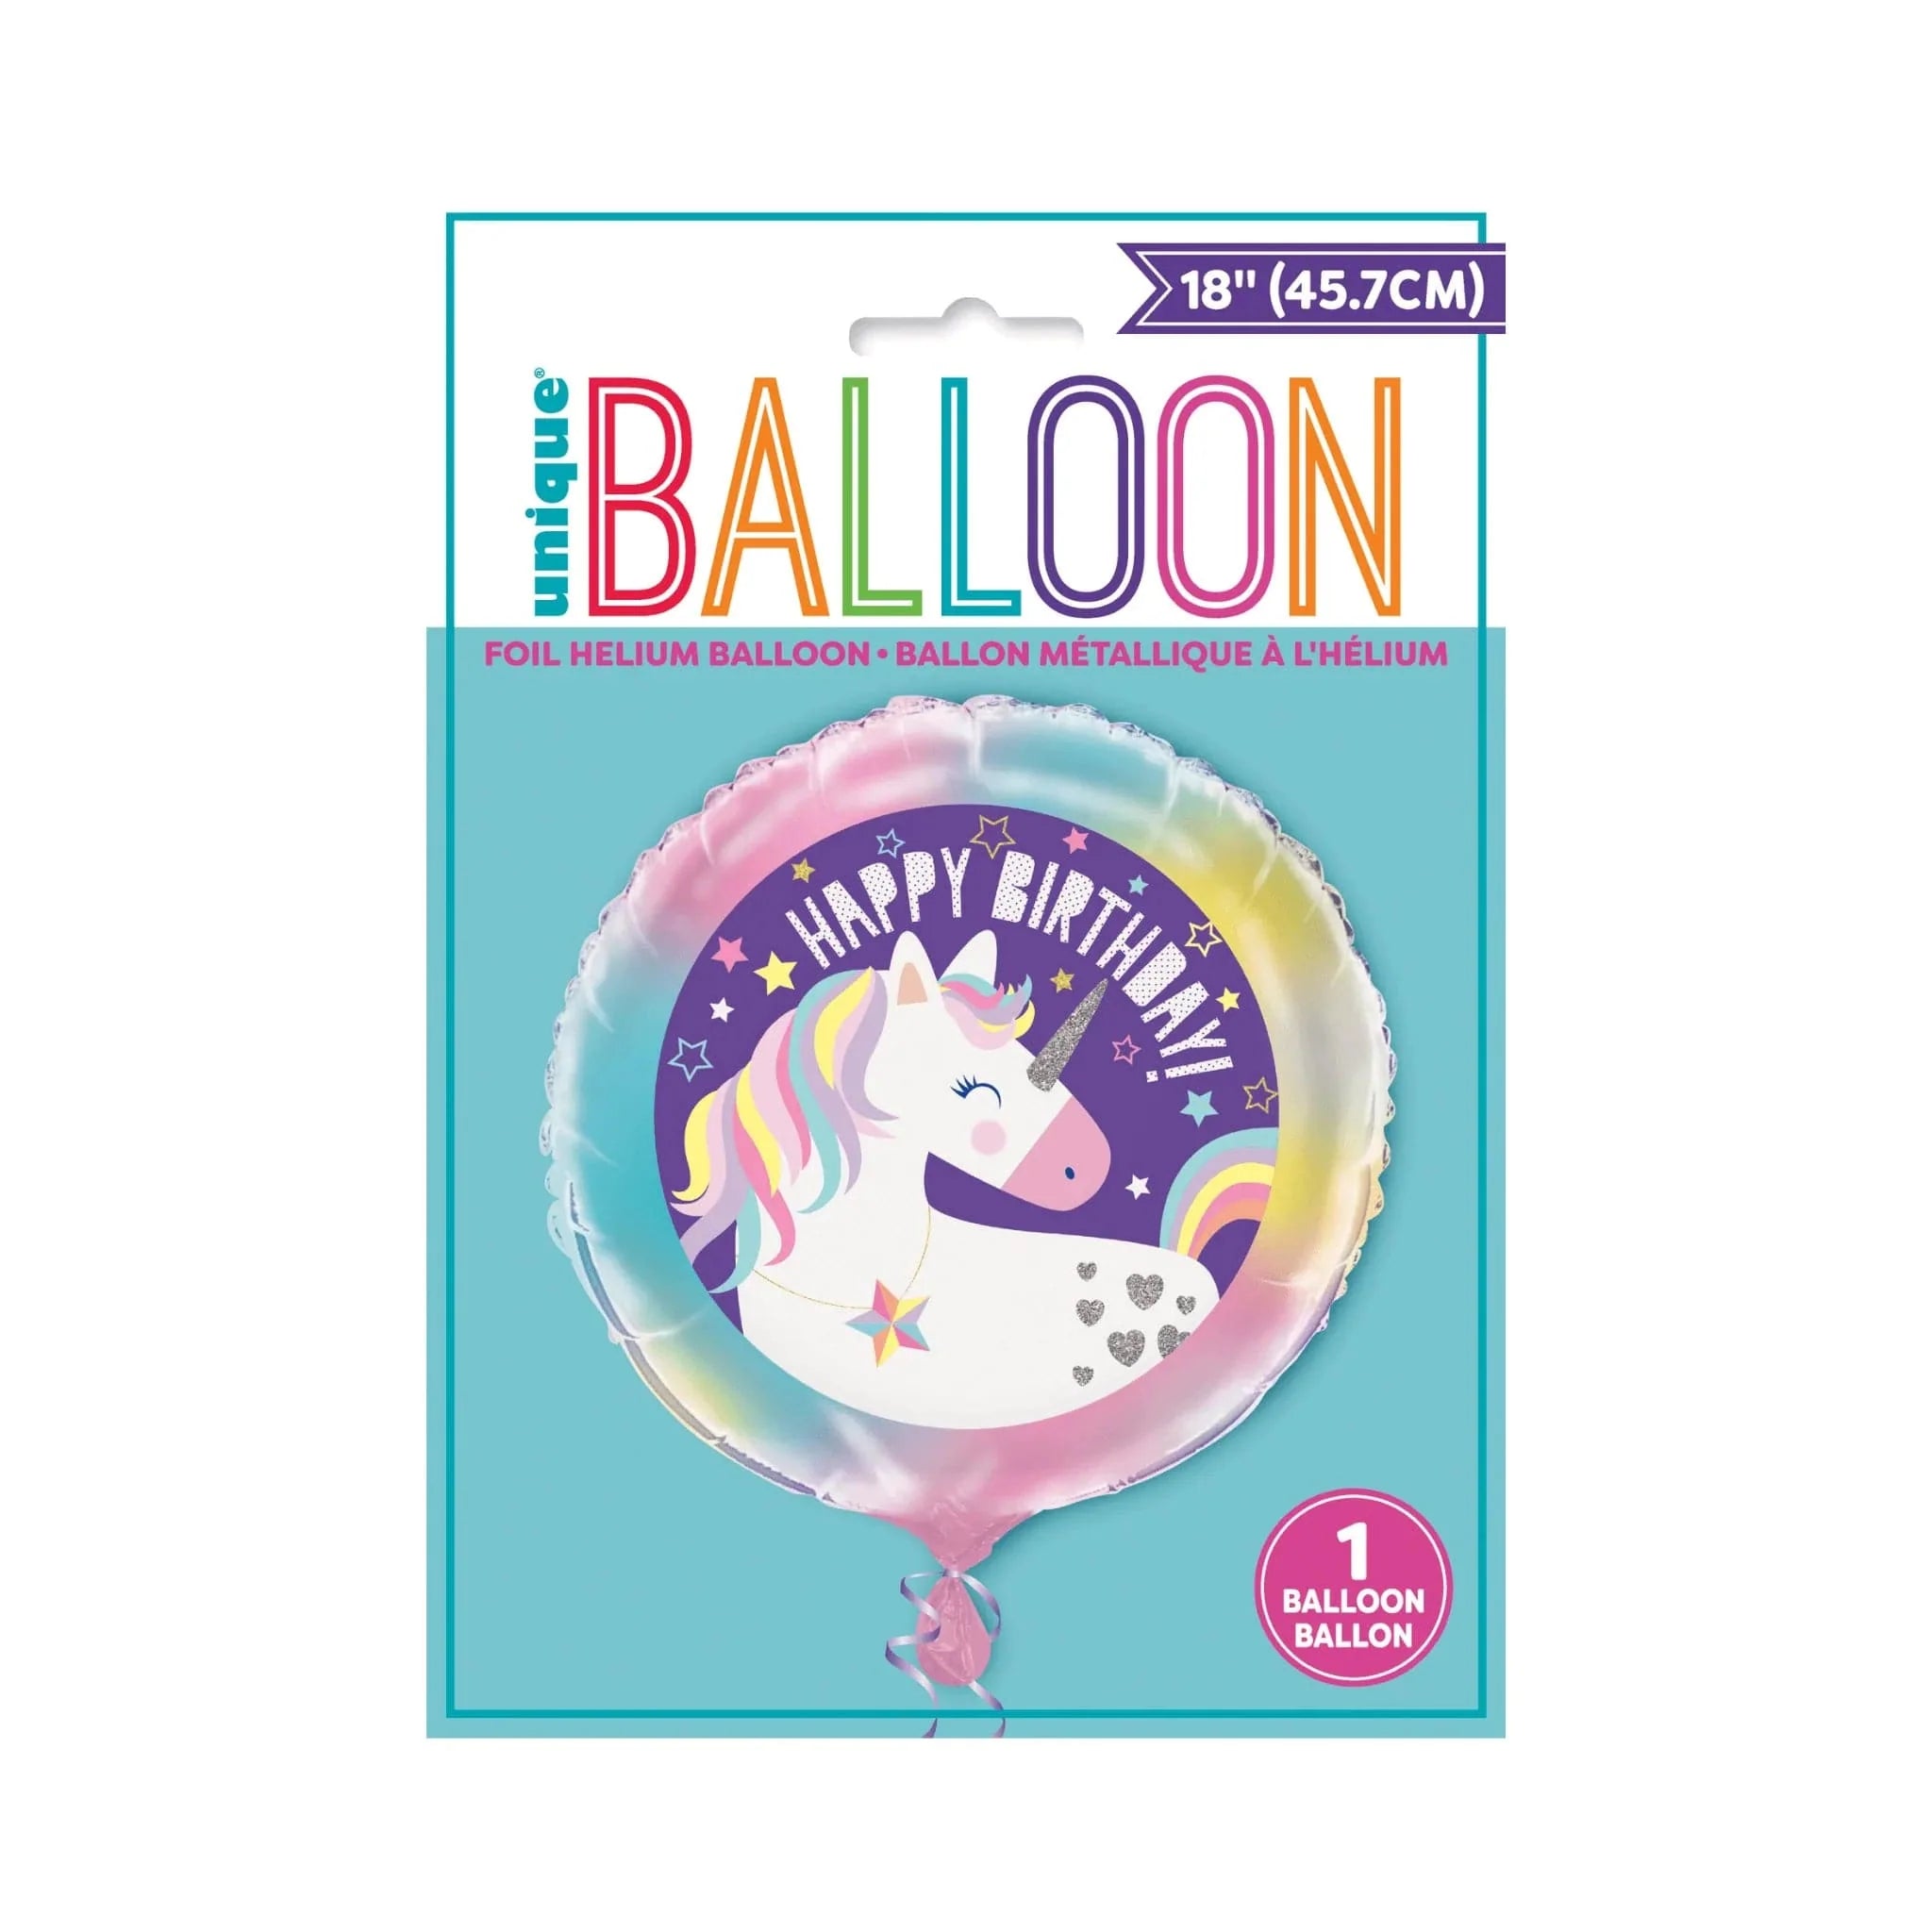 Unicorn 18" Foil Balloon - Kids Party Craft